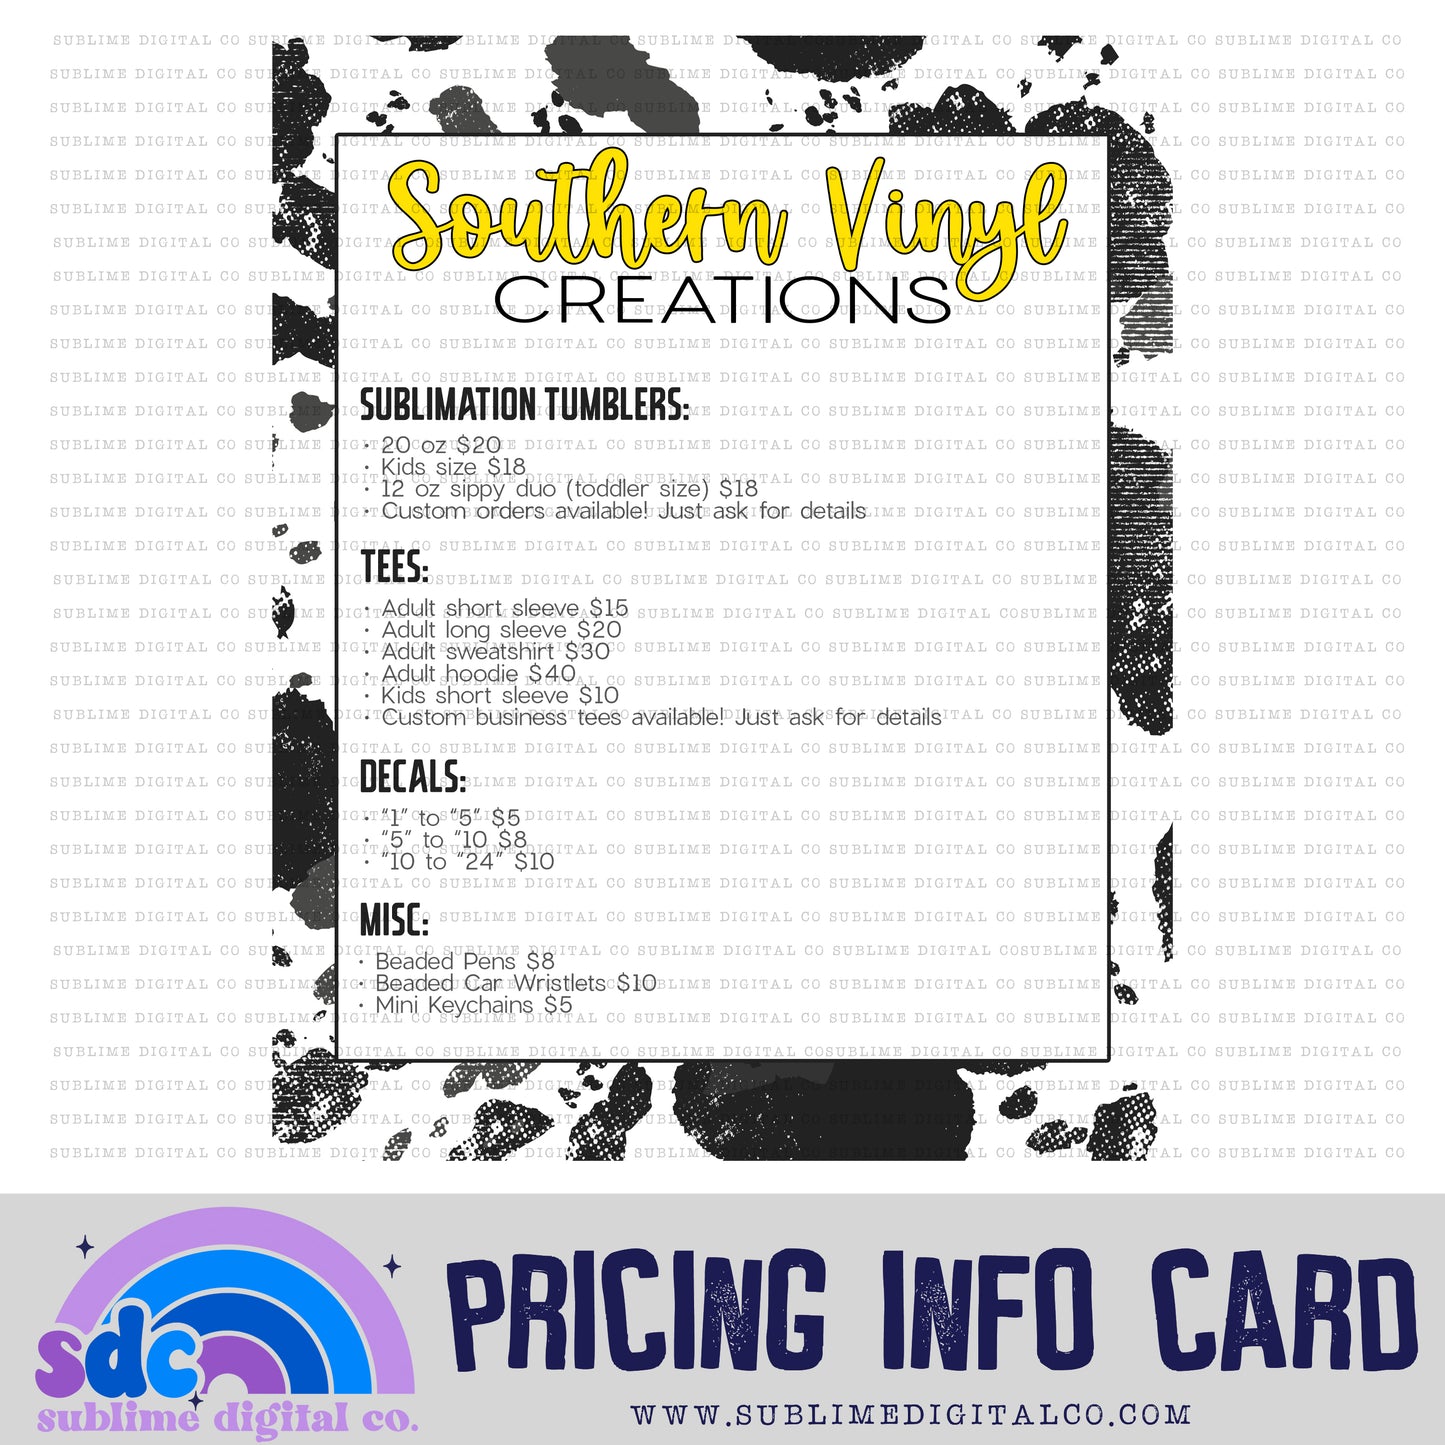 Pricing Info Card • Business Branding • Custom Digital Designs